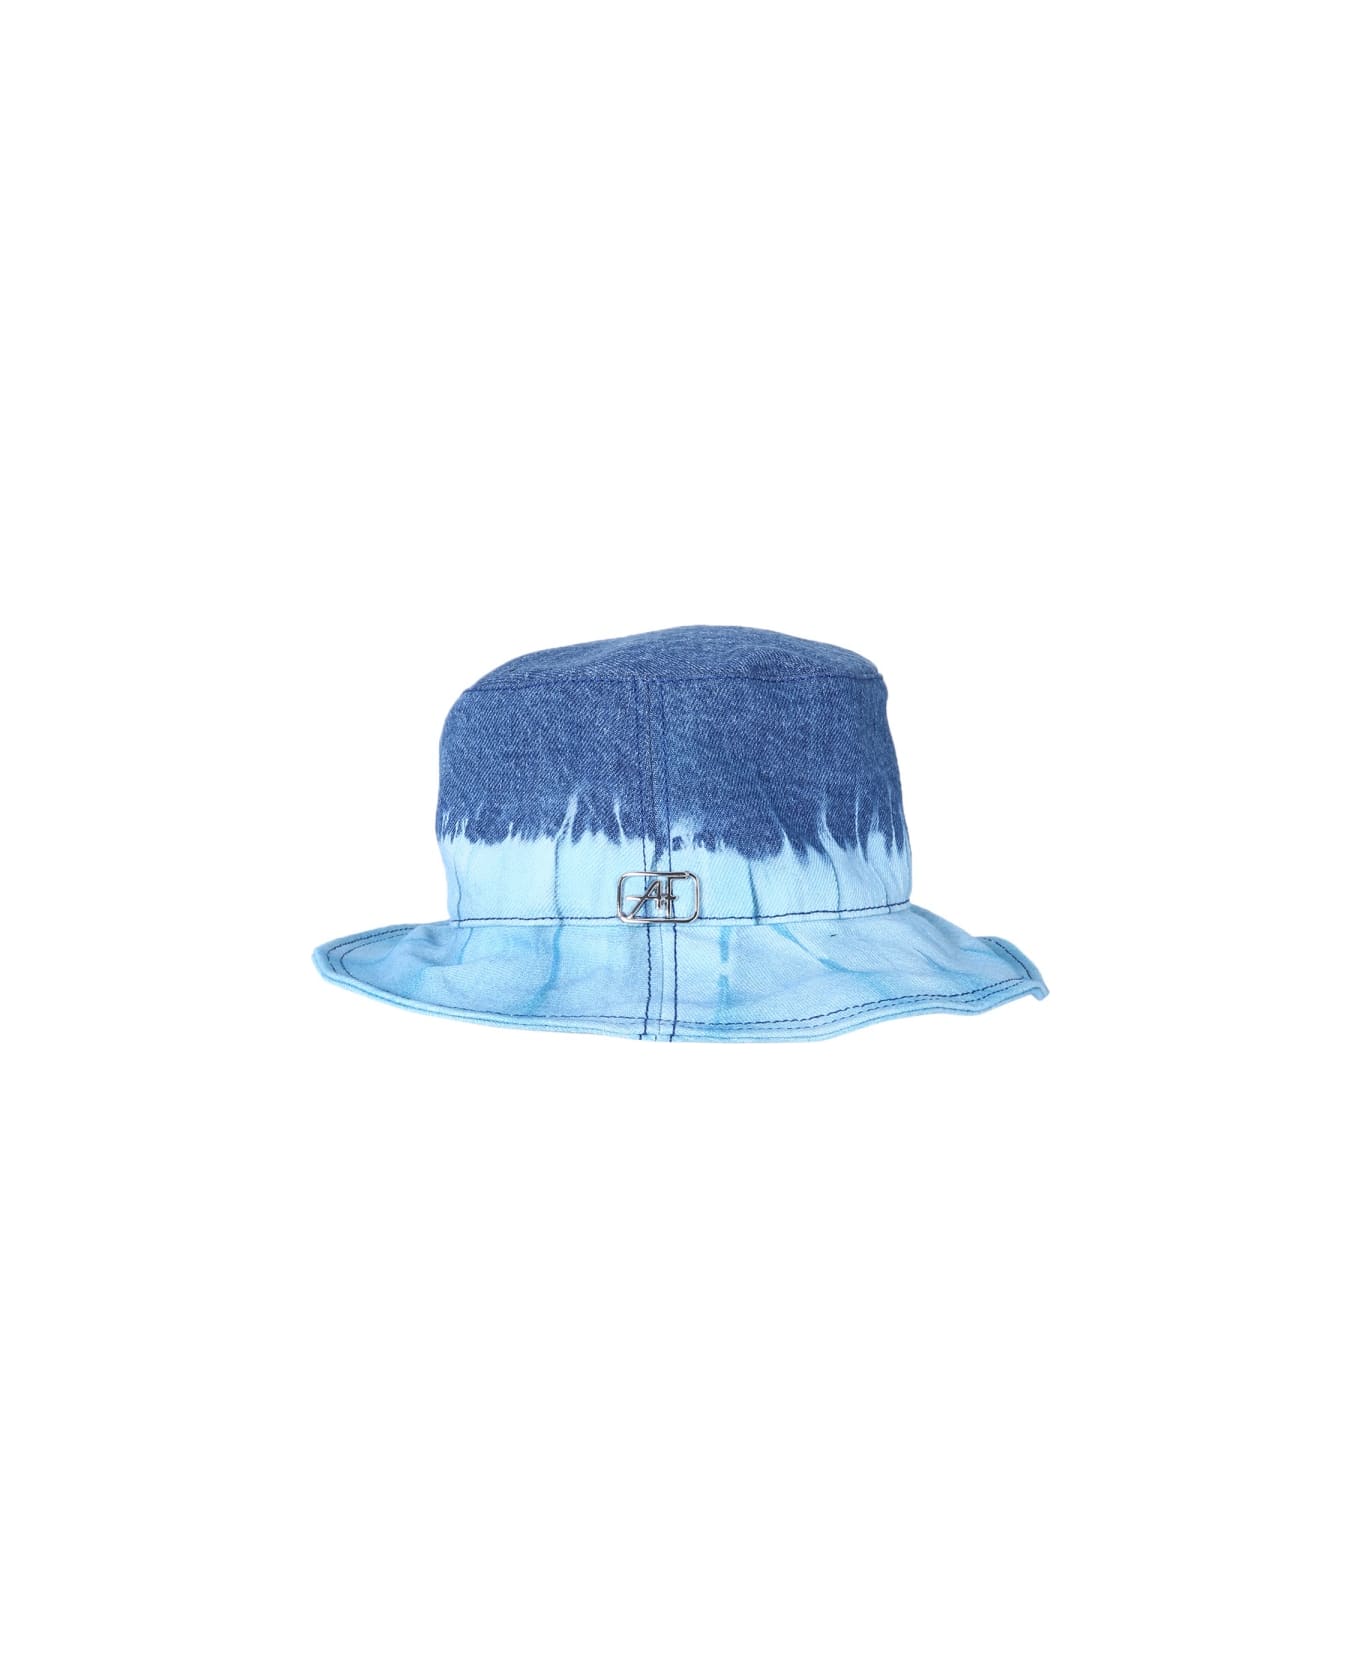 Alberta Ferretti Bucket Hat With Tie Dye Print - BLUE